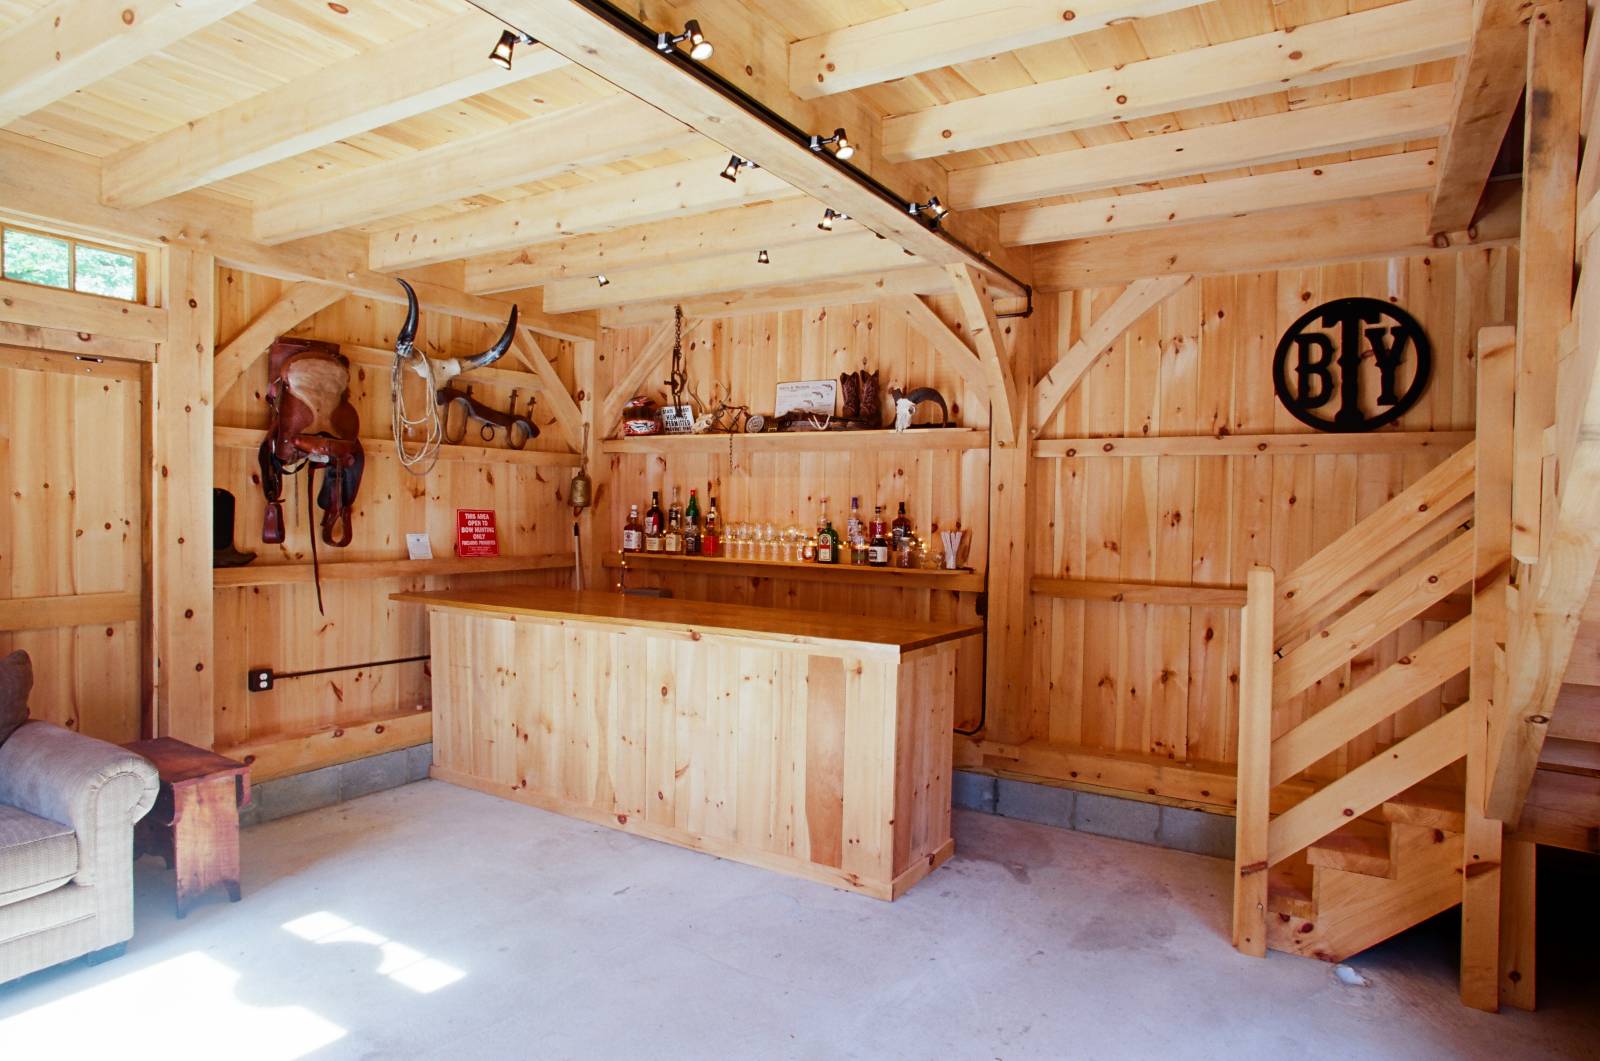 Inside the post & beam barn turned saloon